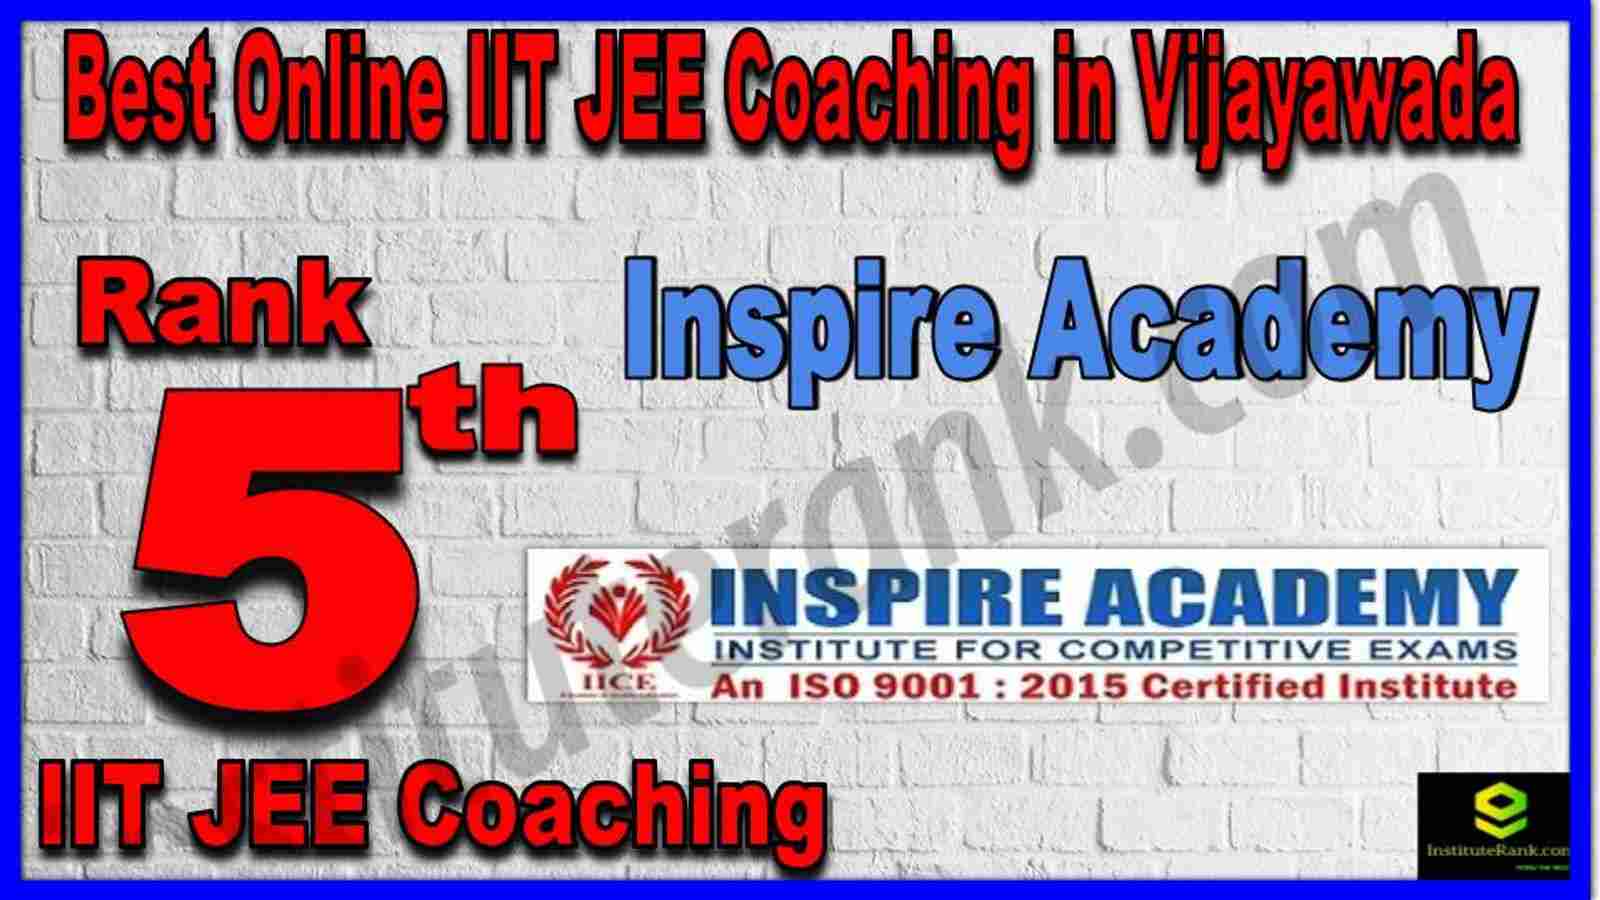 Rank 5th Best Online IIT JEE Coaching in Vijayawada